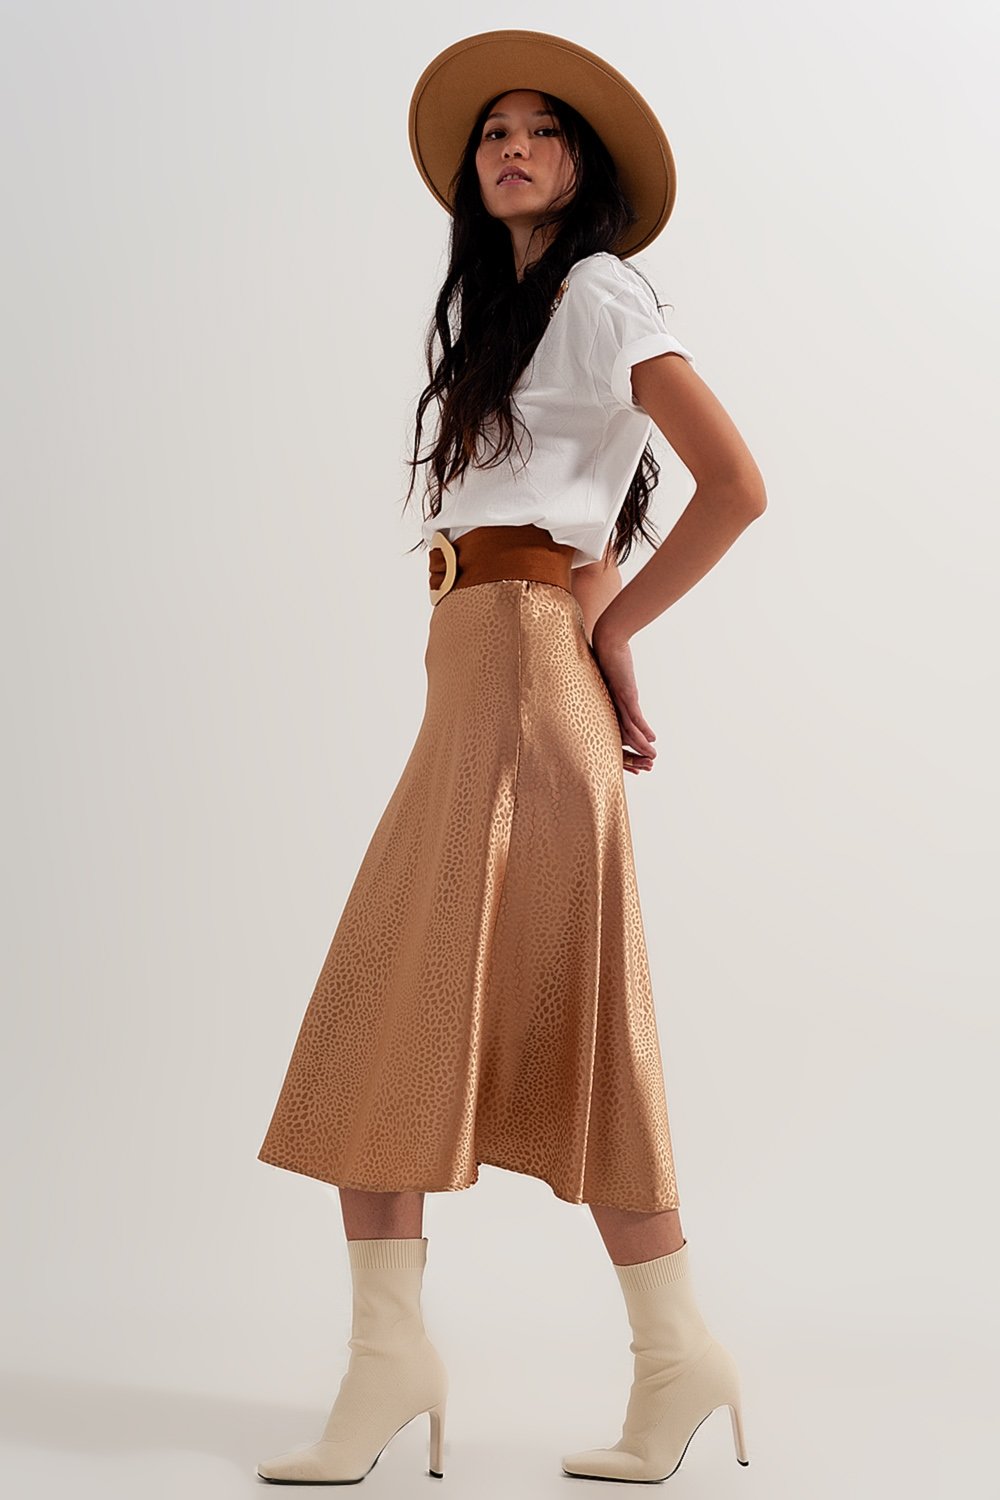 TEEK - Gold Color Midi Skirt in Abstract Animal Print SKIRT TEEK M   